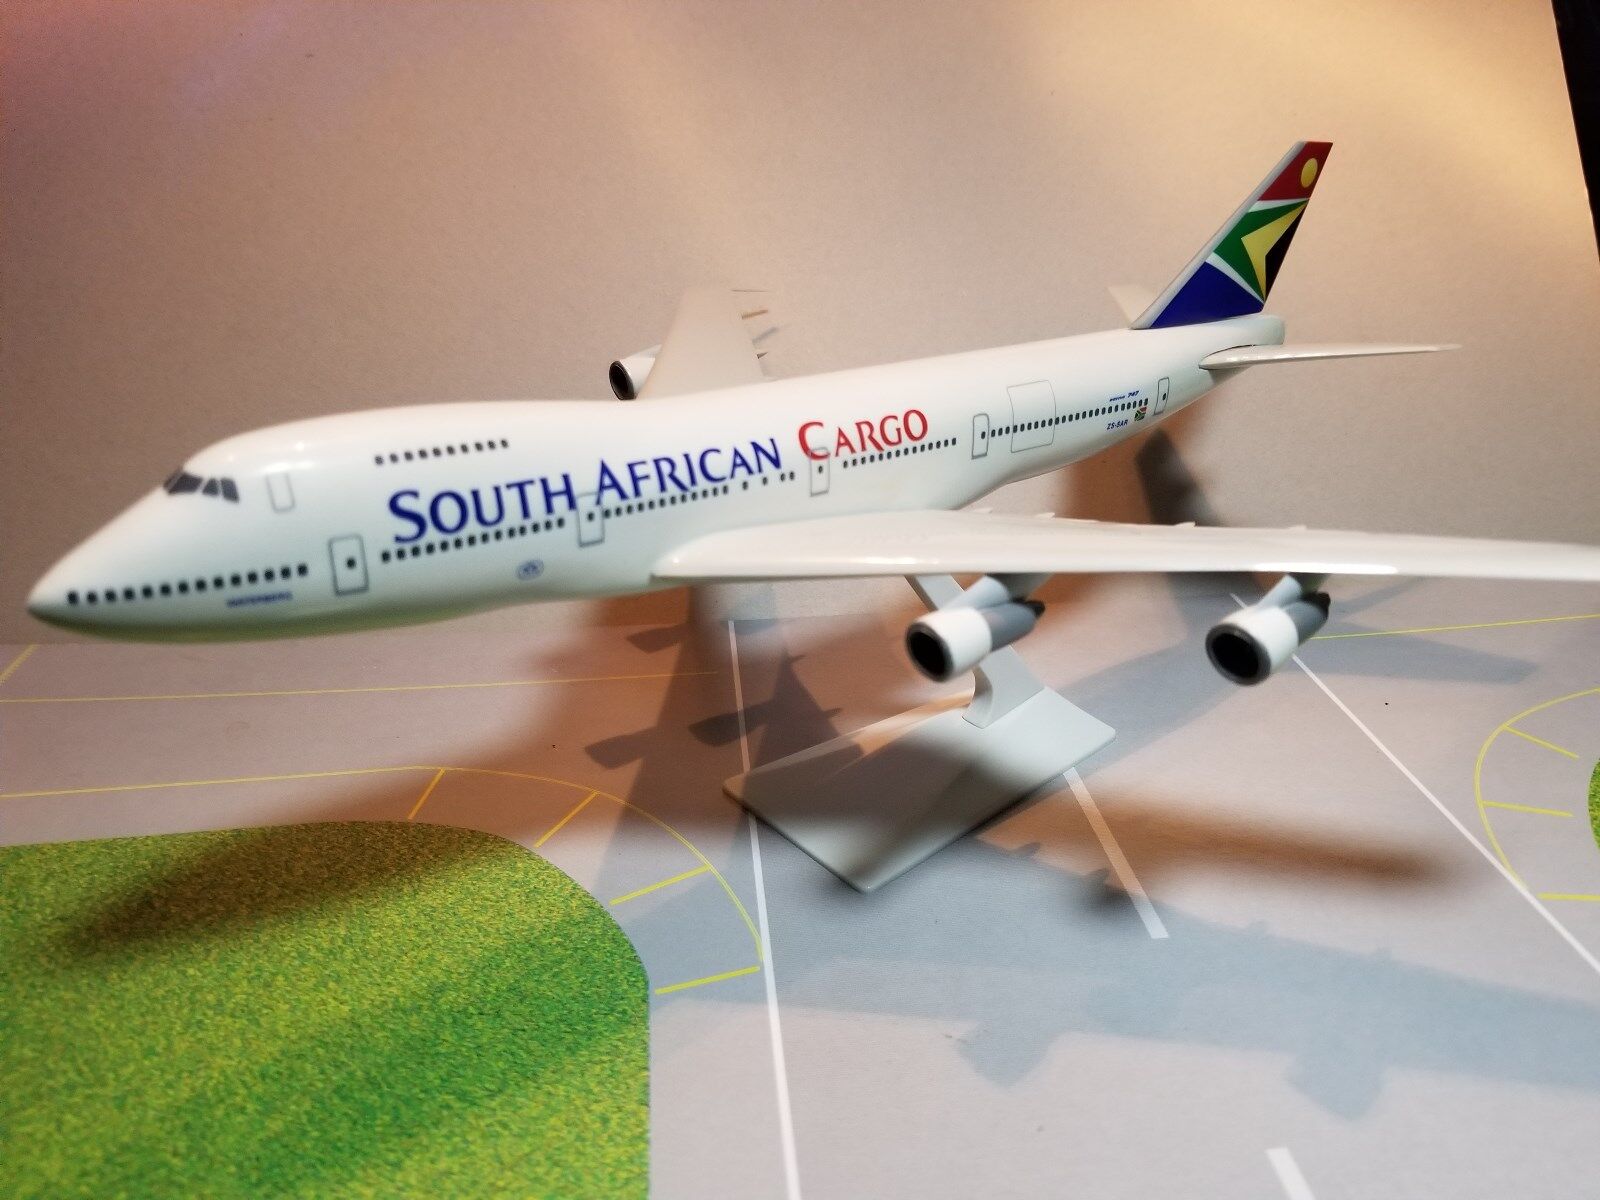 FLIGHT MINATURE SOUTH AFRICAN CARGO 747-200 1:250 SCALE PLASTIC SNAPFIT MODEL